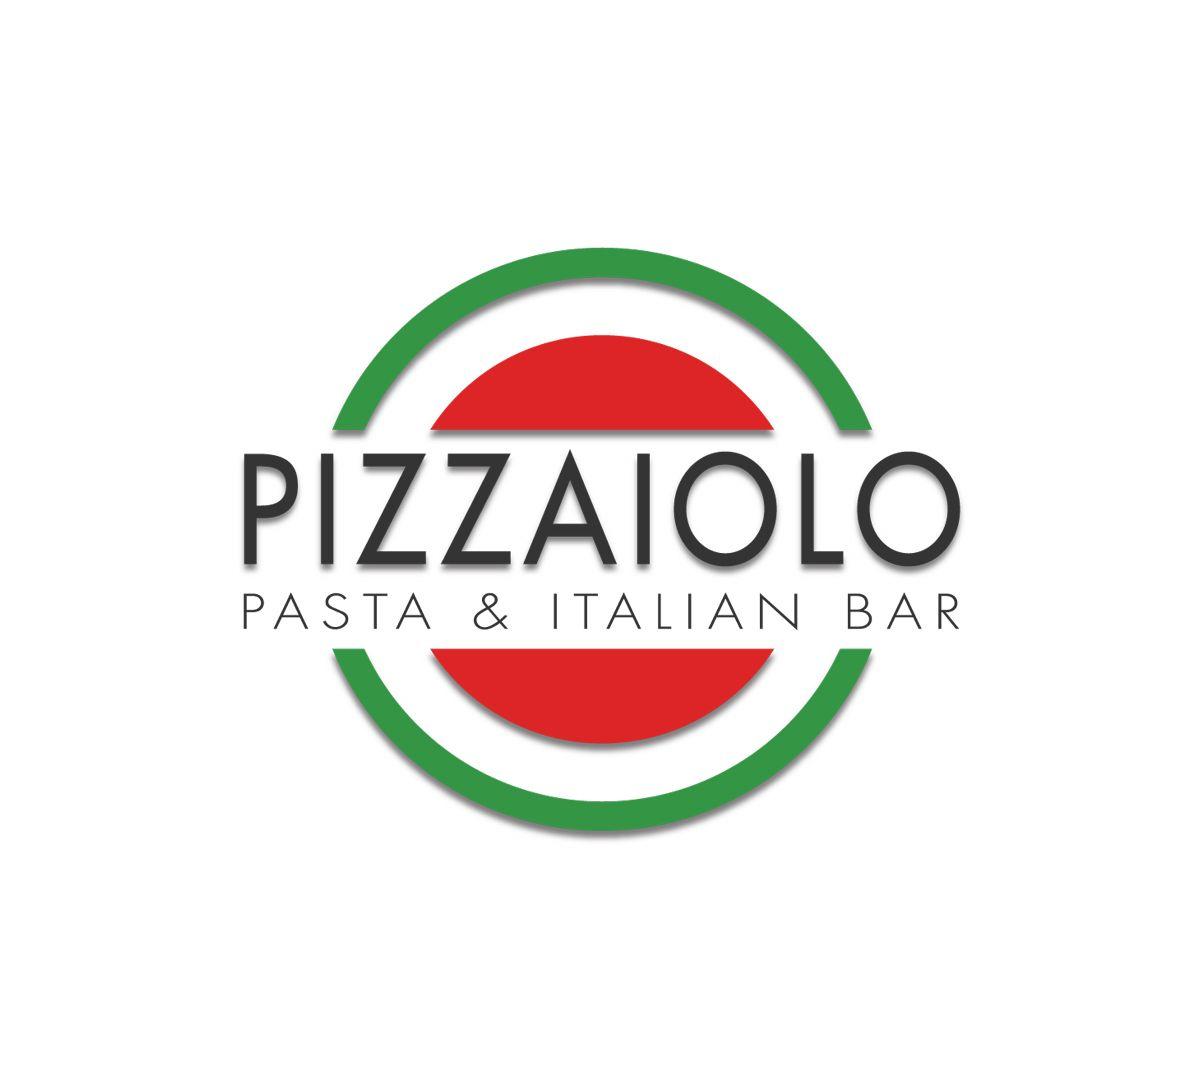 Italian Restaurant Logo - Bold, Modern, Restaurant Logo Design for Pizzaiolo - Pasta & Italian ...